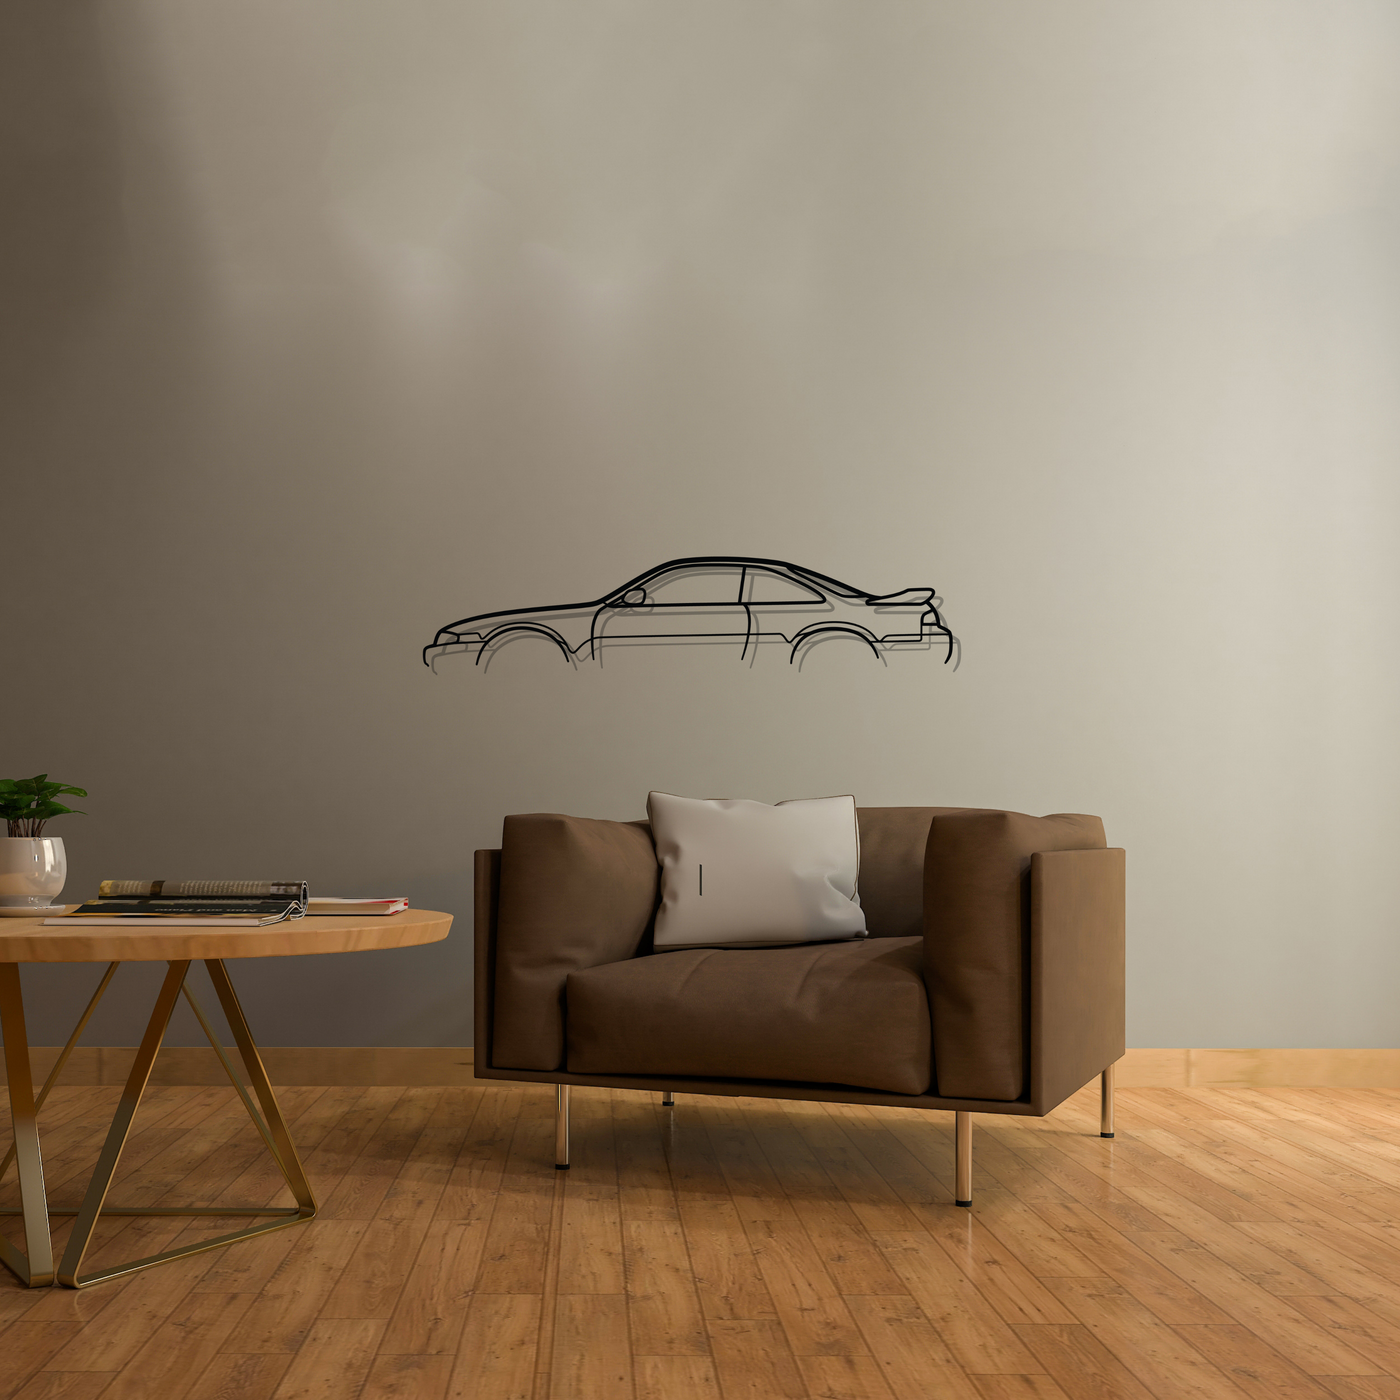 Silvia S14 200sx Classic Silhouette Metal Wall Art